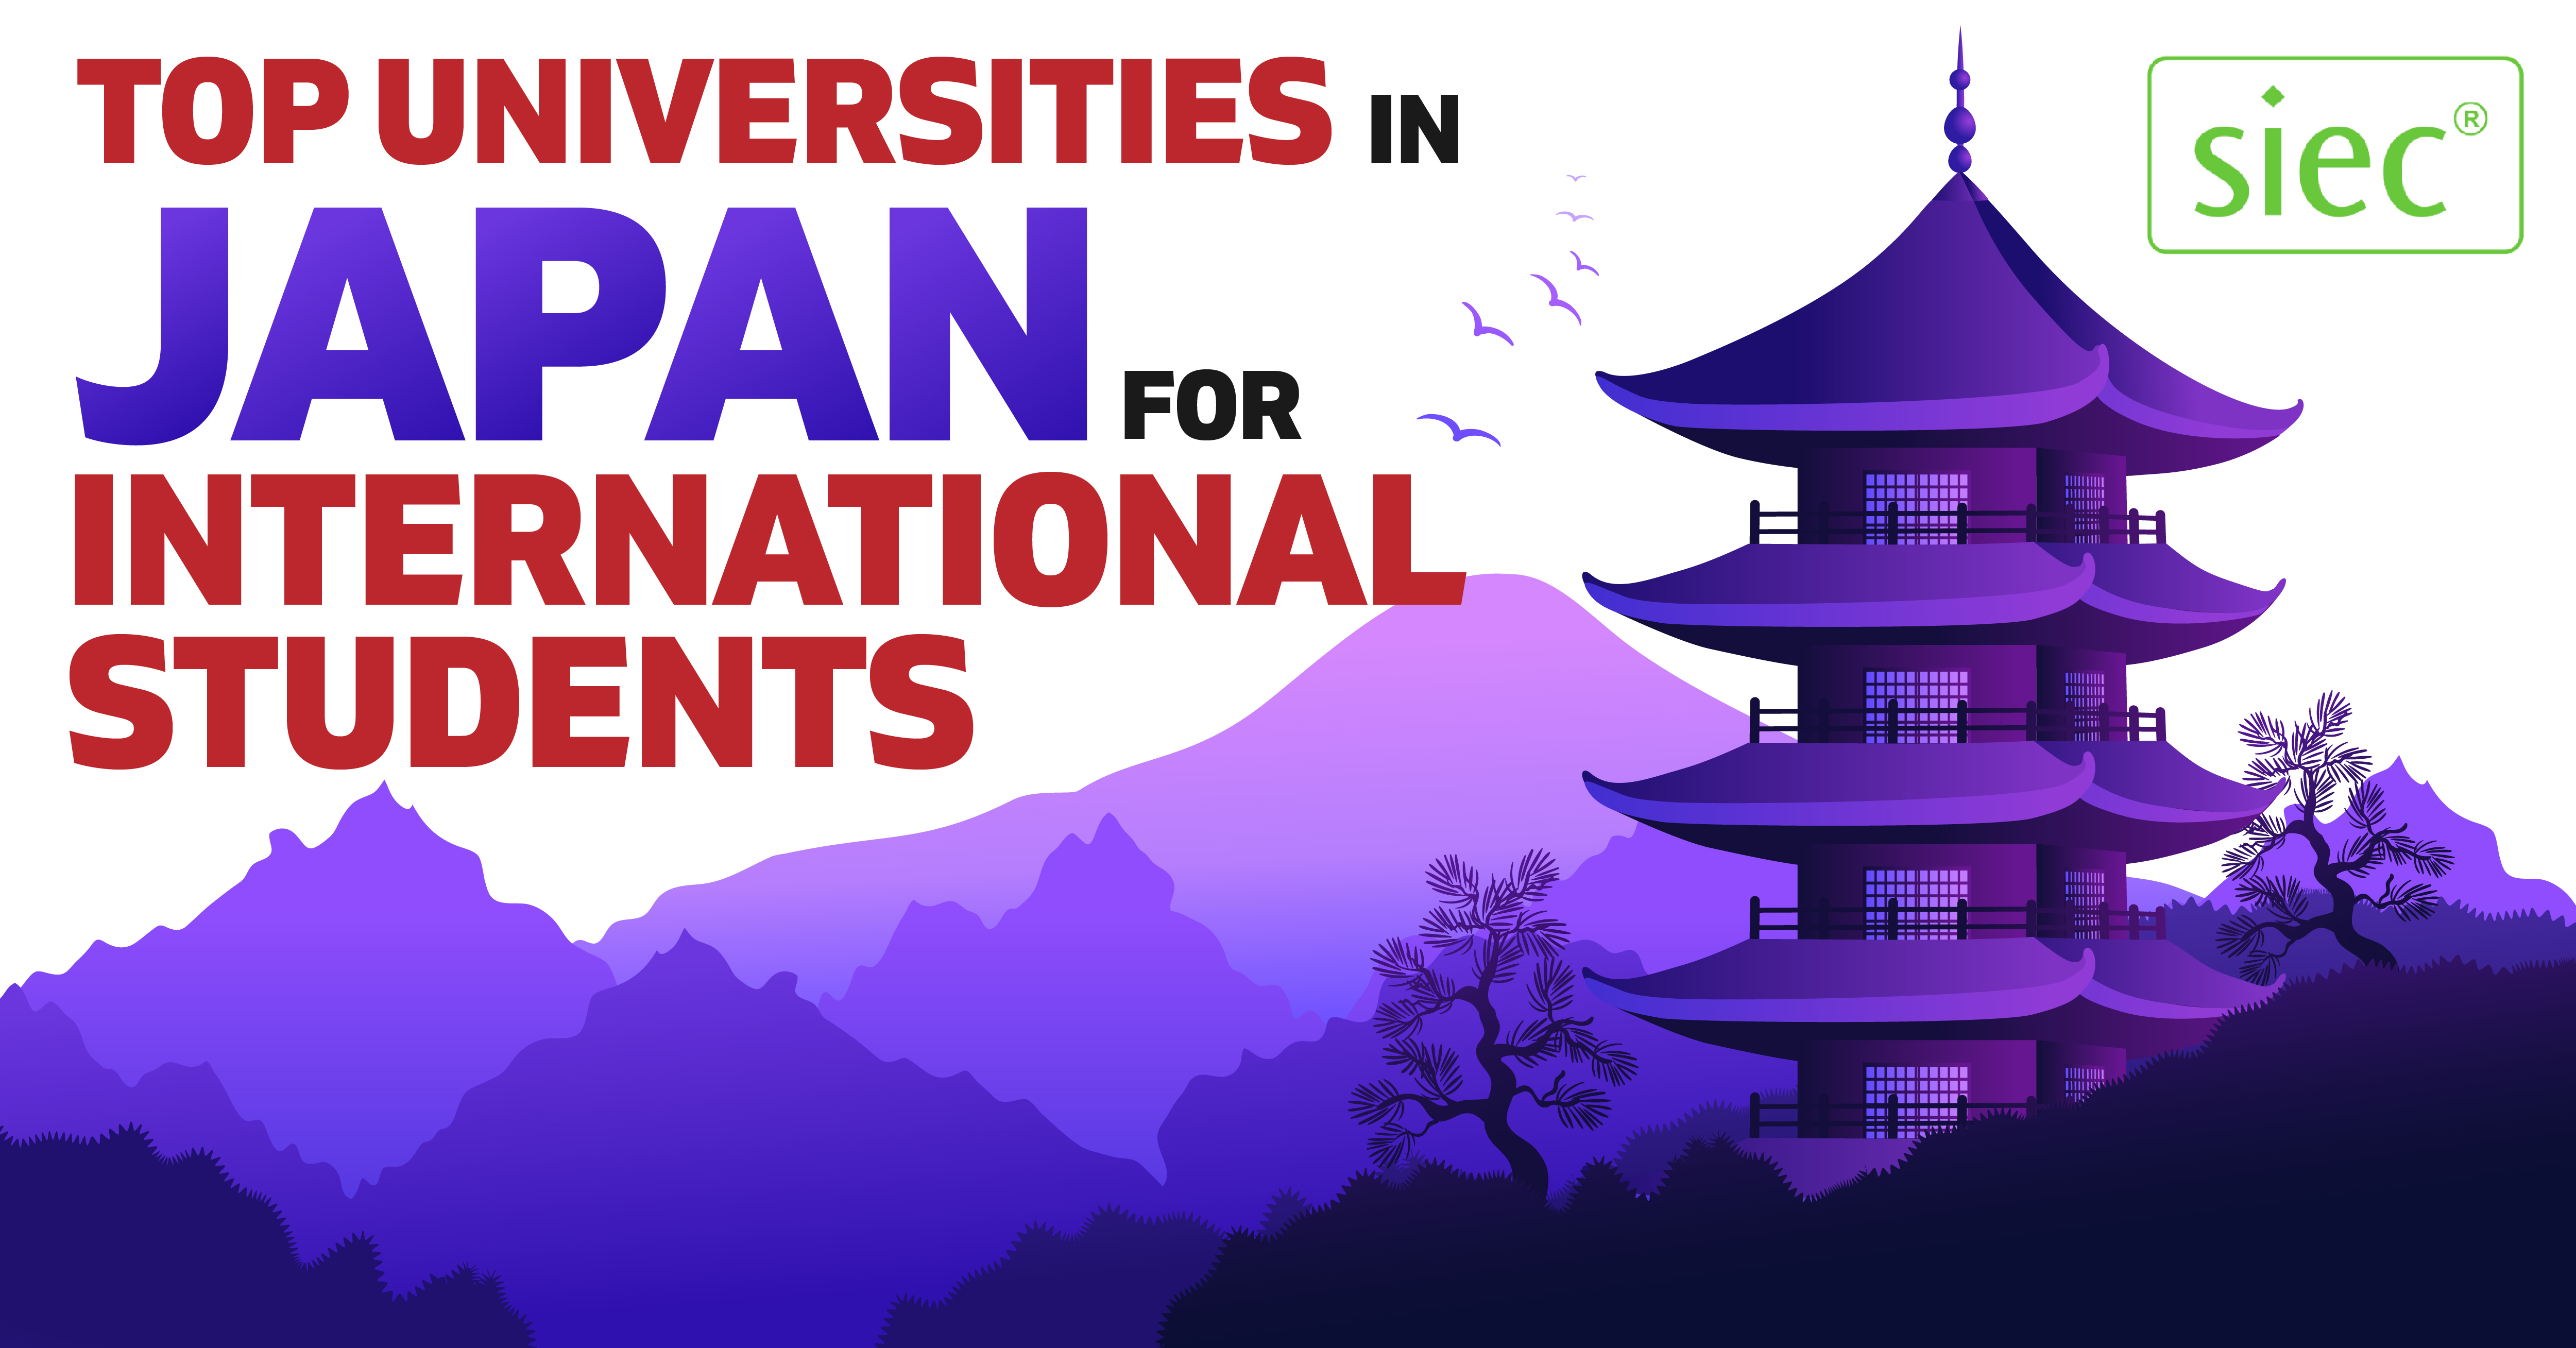 Top Universities in Japan for International Students